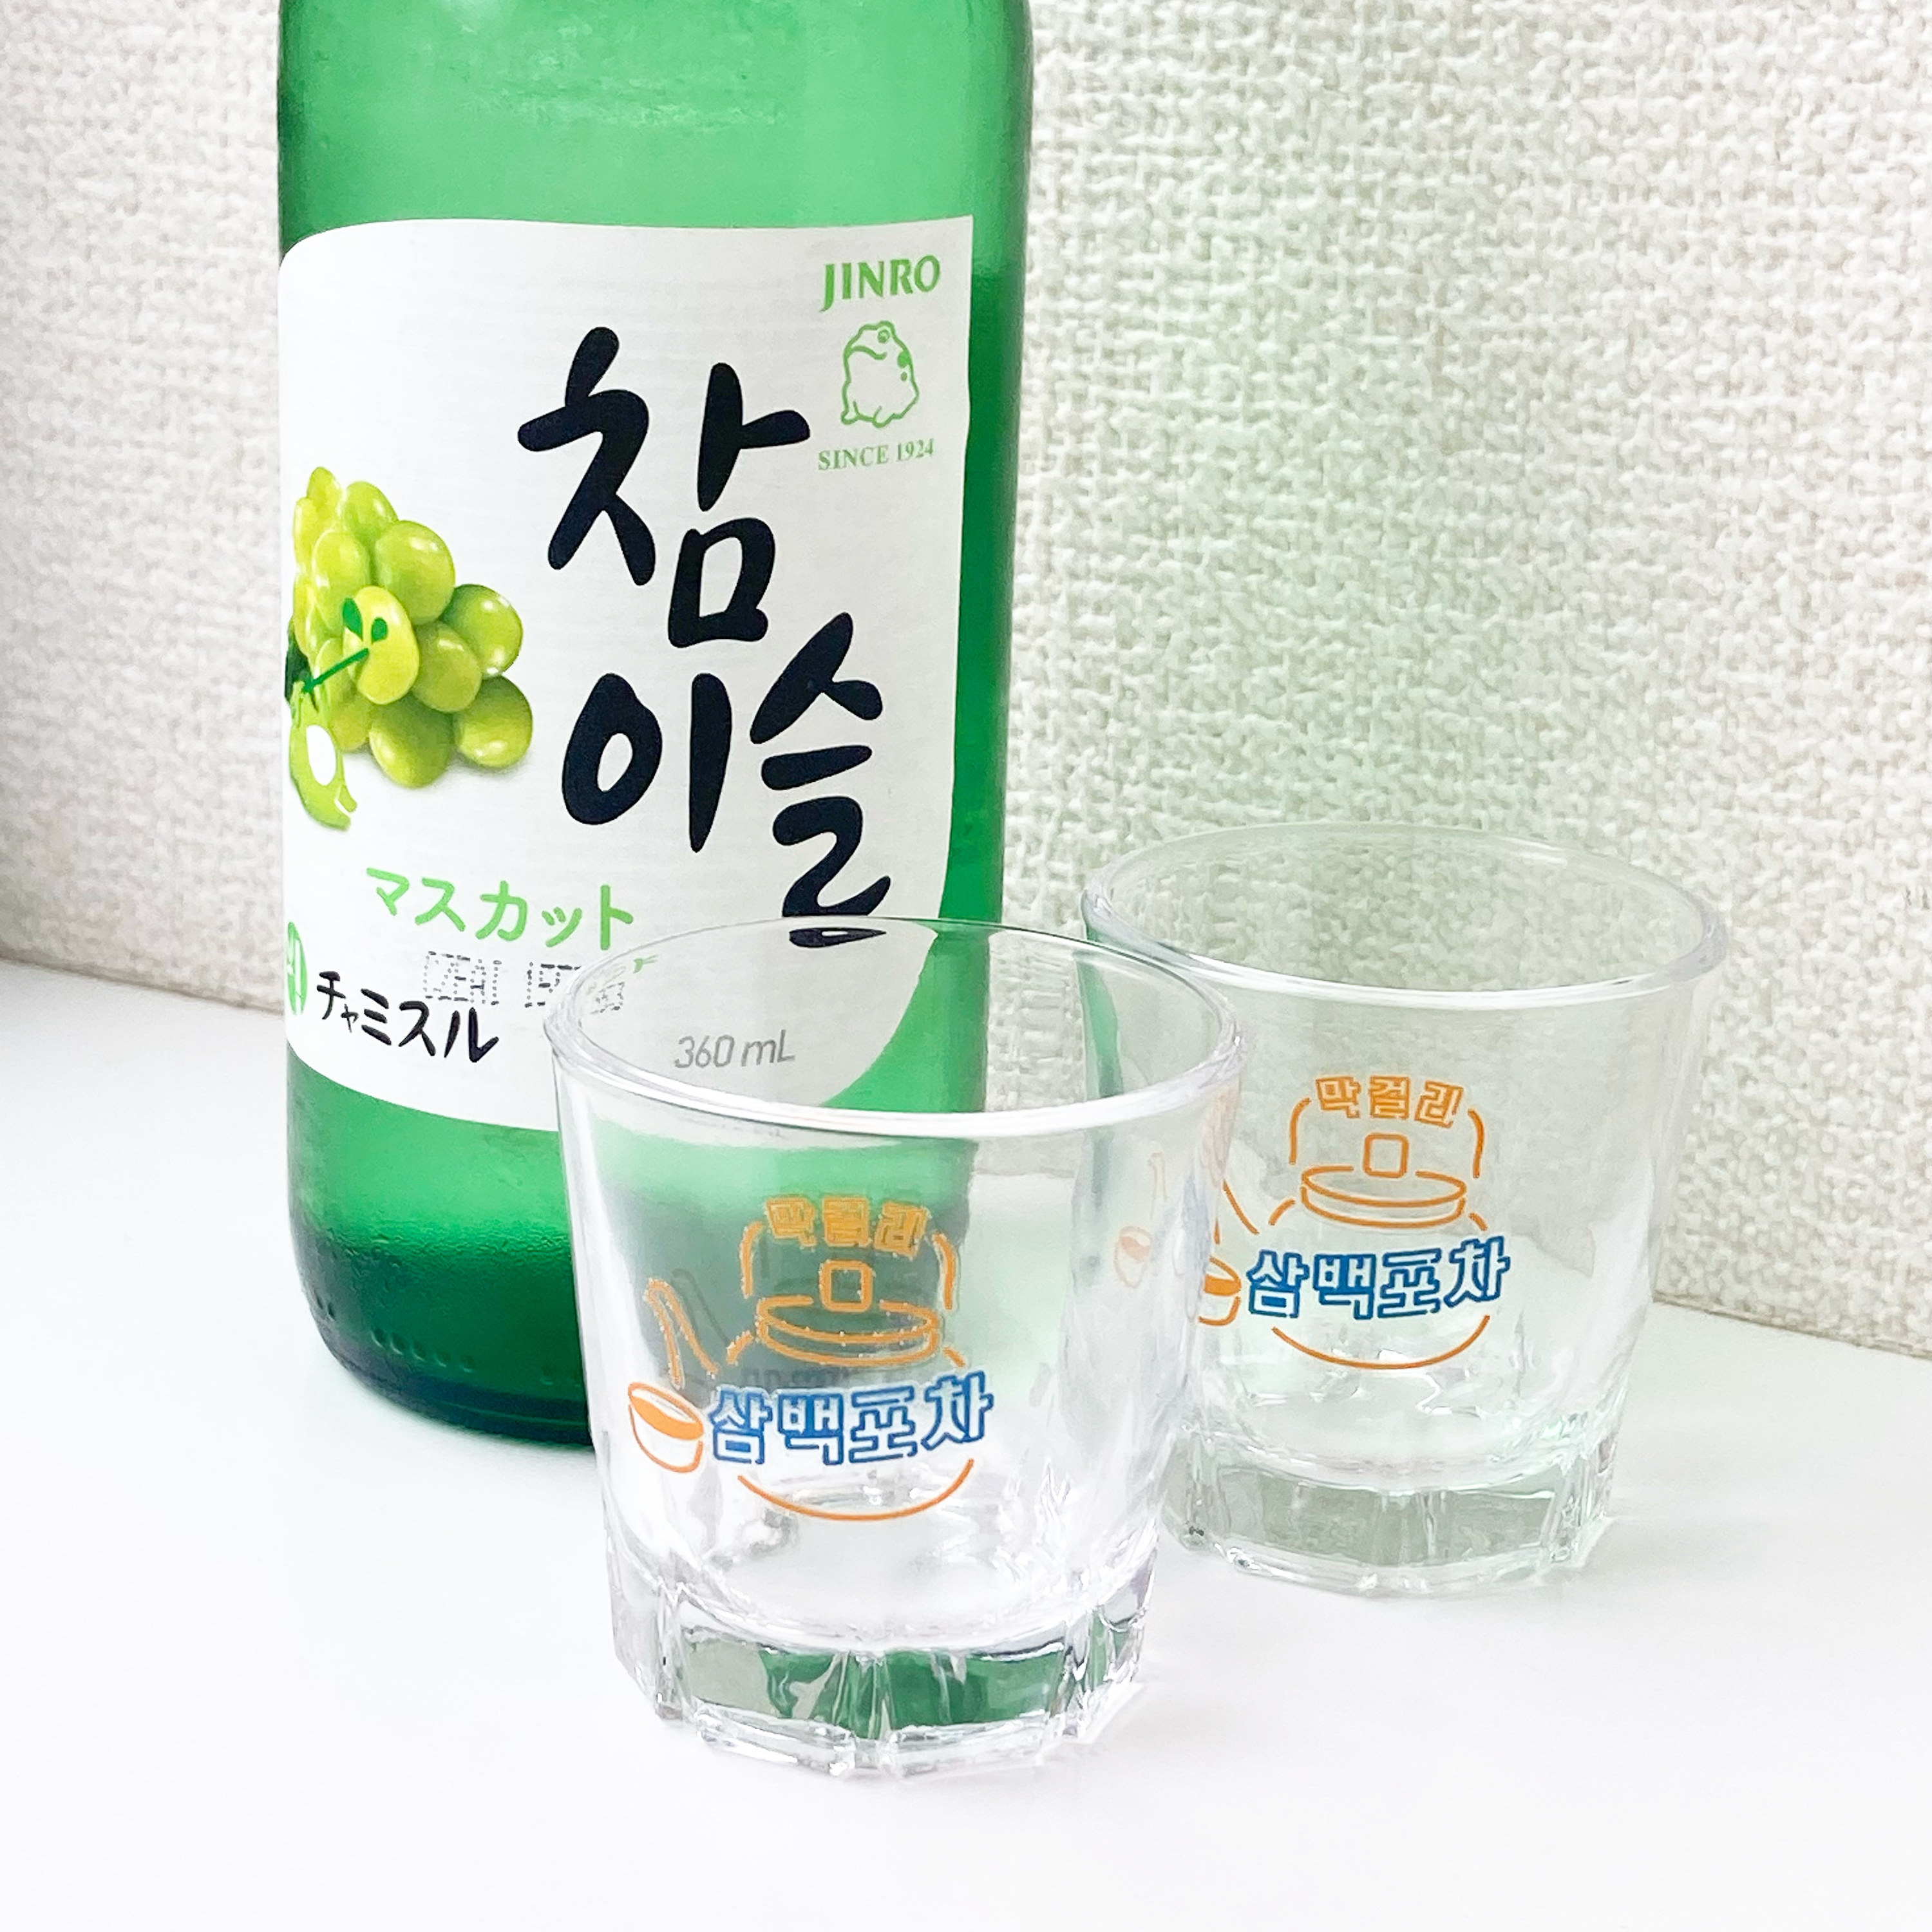 3COINS（スリーコインズ）のオススメの便利グッズ「【韓国ポチャ】ソジュグラス2個セット」